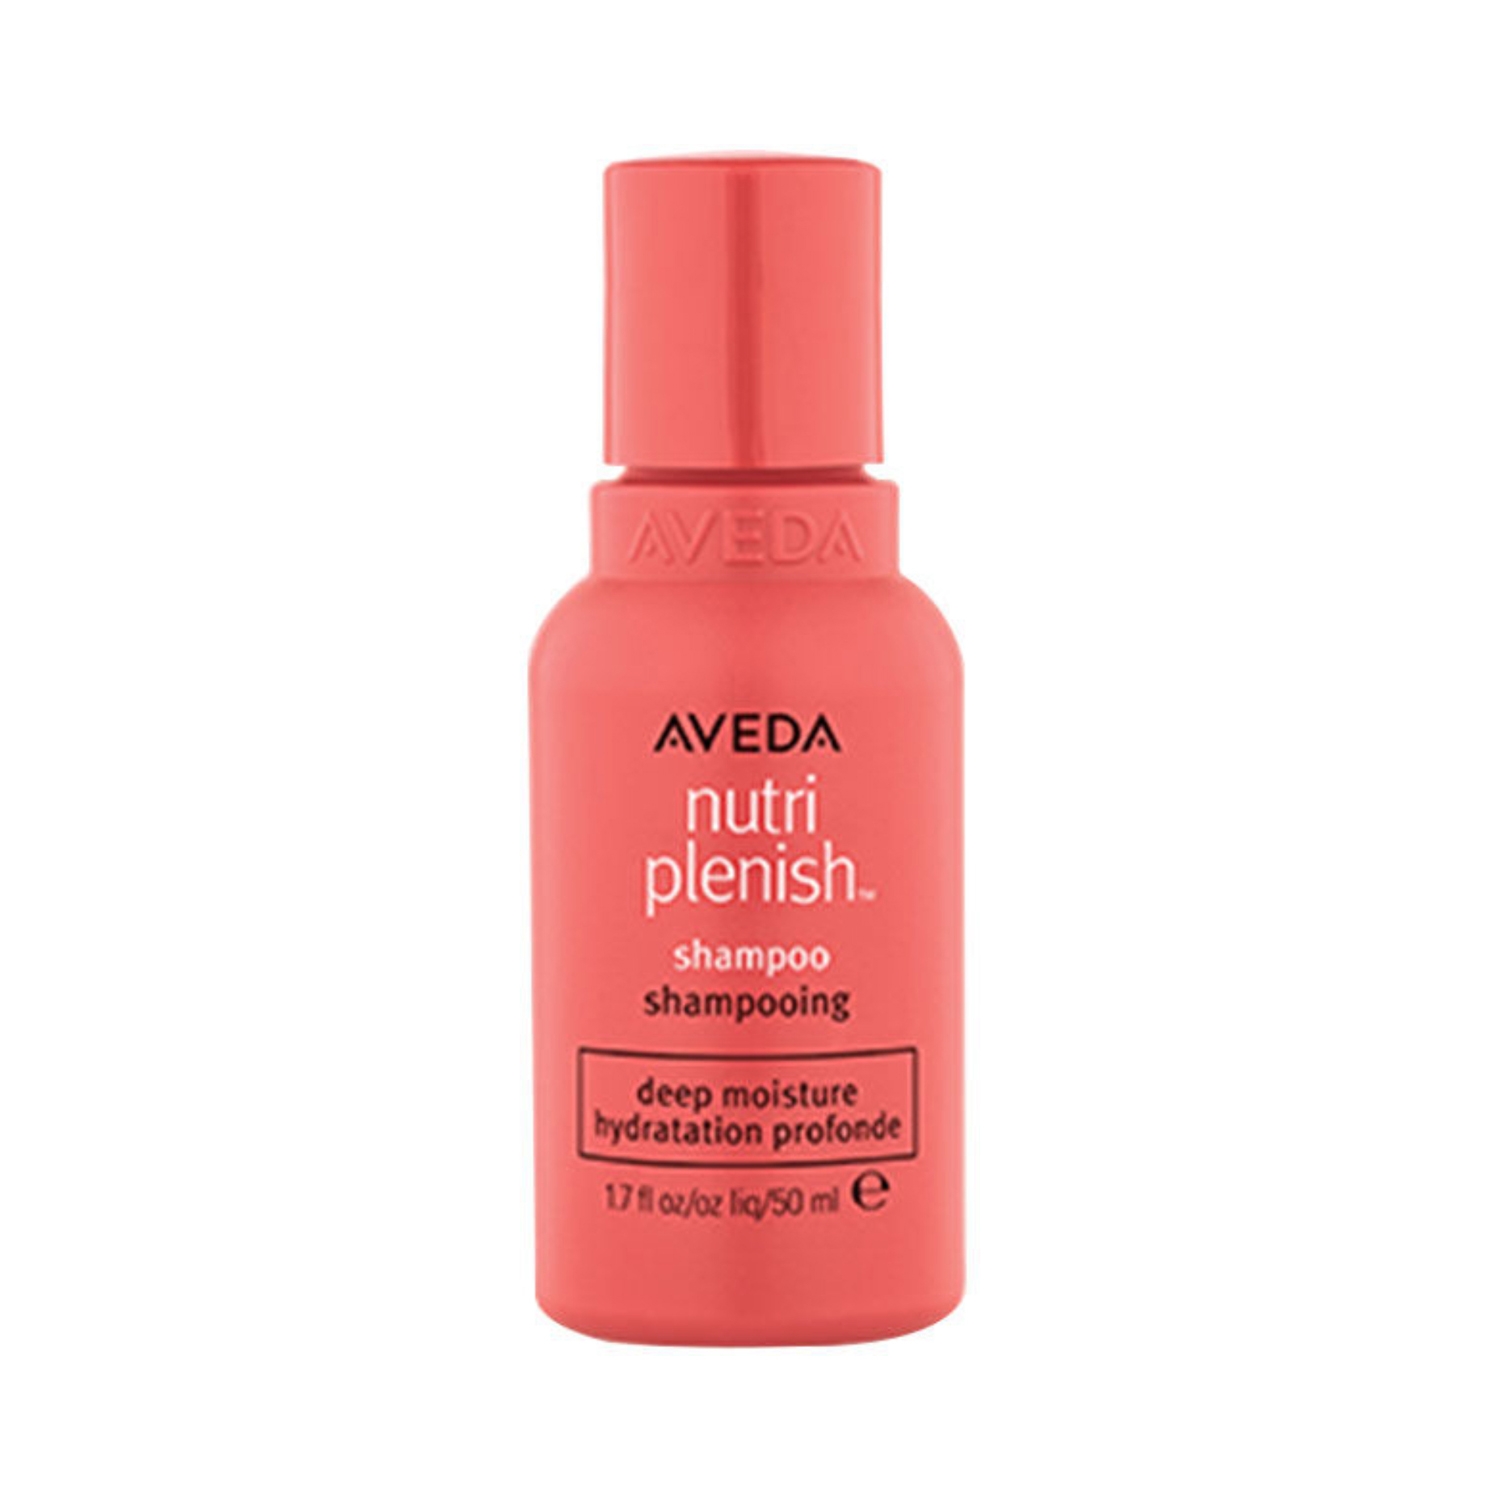 Aveda | Aveda Nutriplenish Hydrating Shampoo Deep Moisture (50ml)